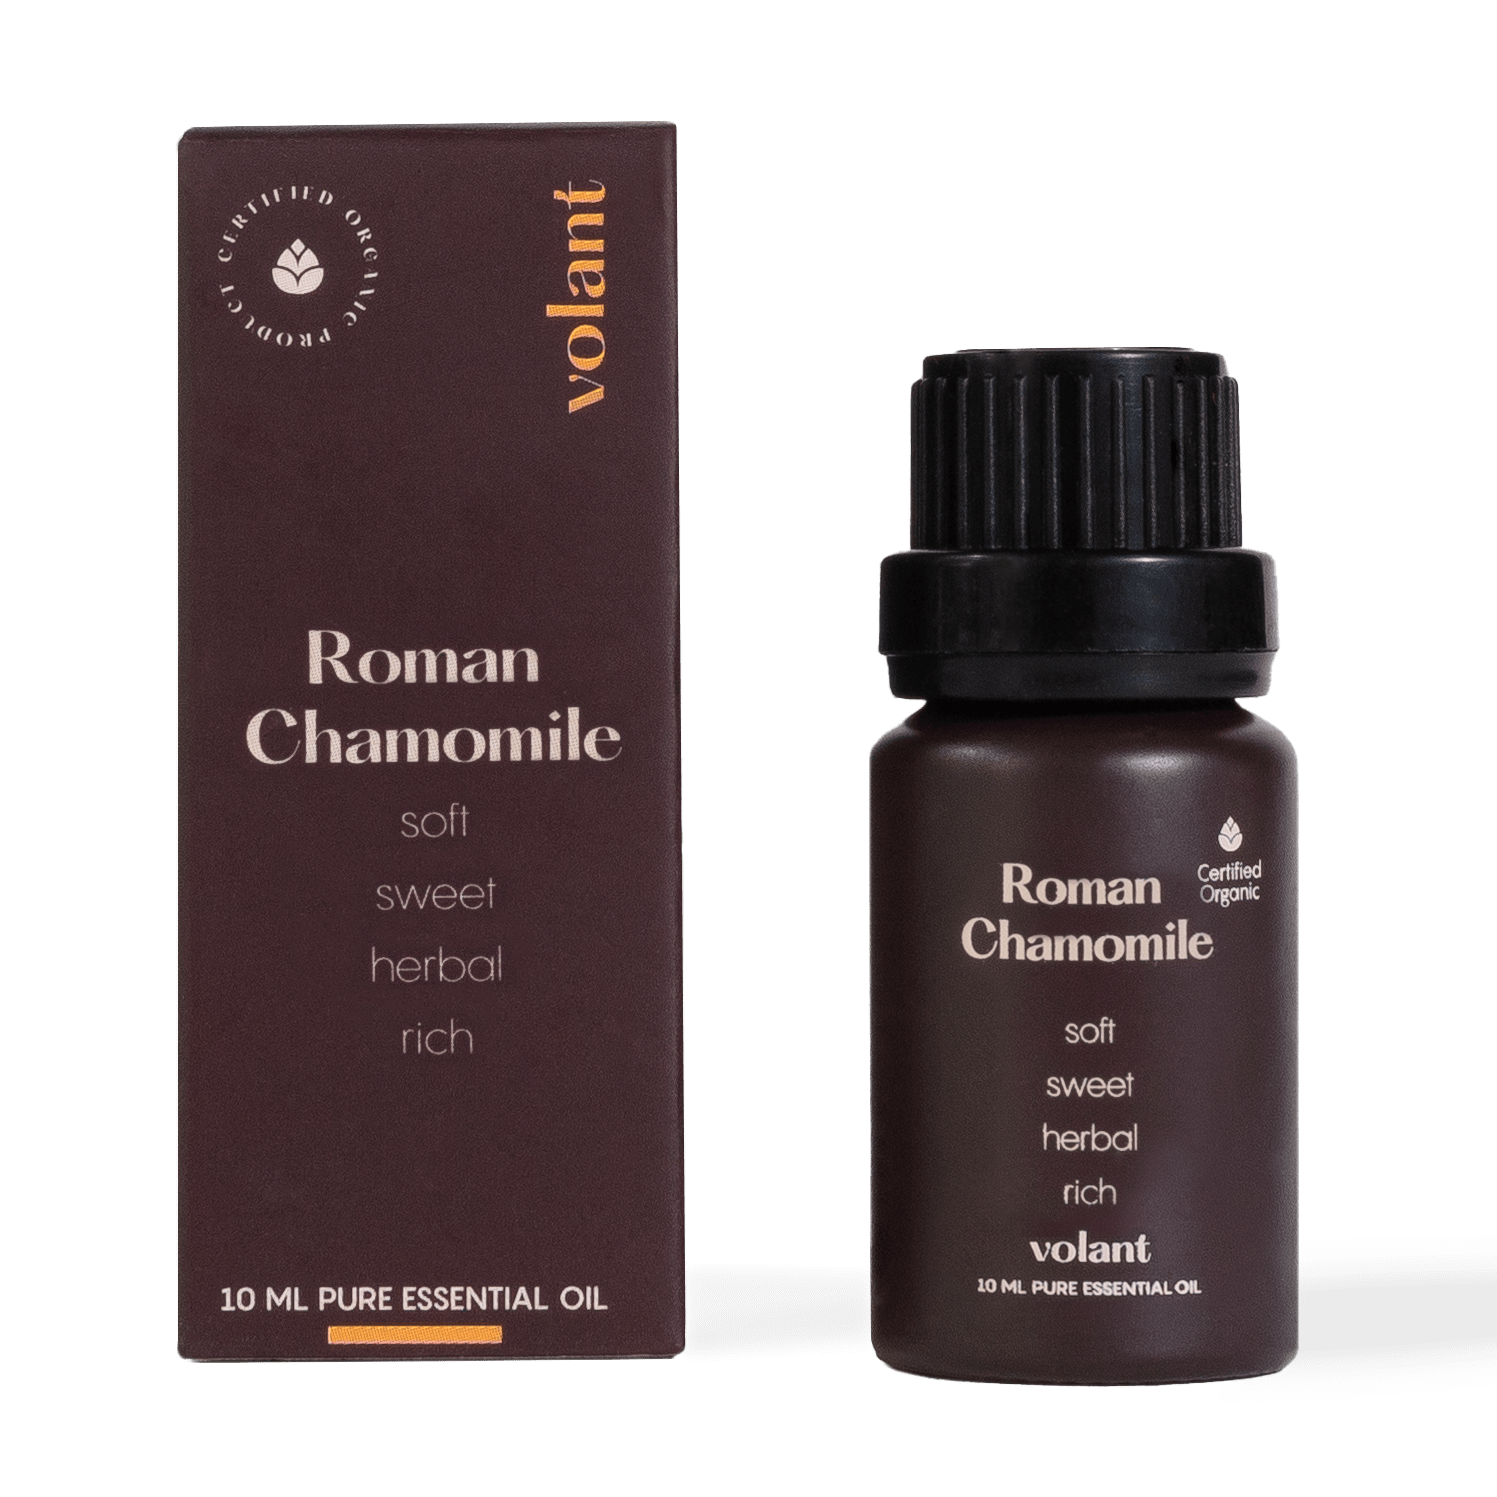 volant organic roman chamomile essential oil bottle packaging skin impurities like acne